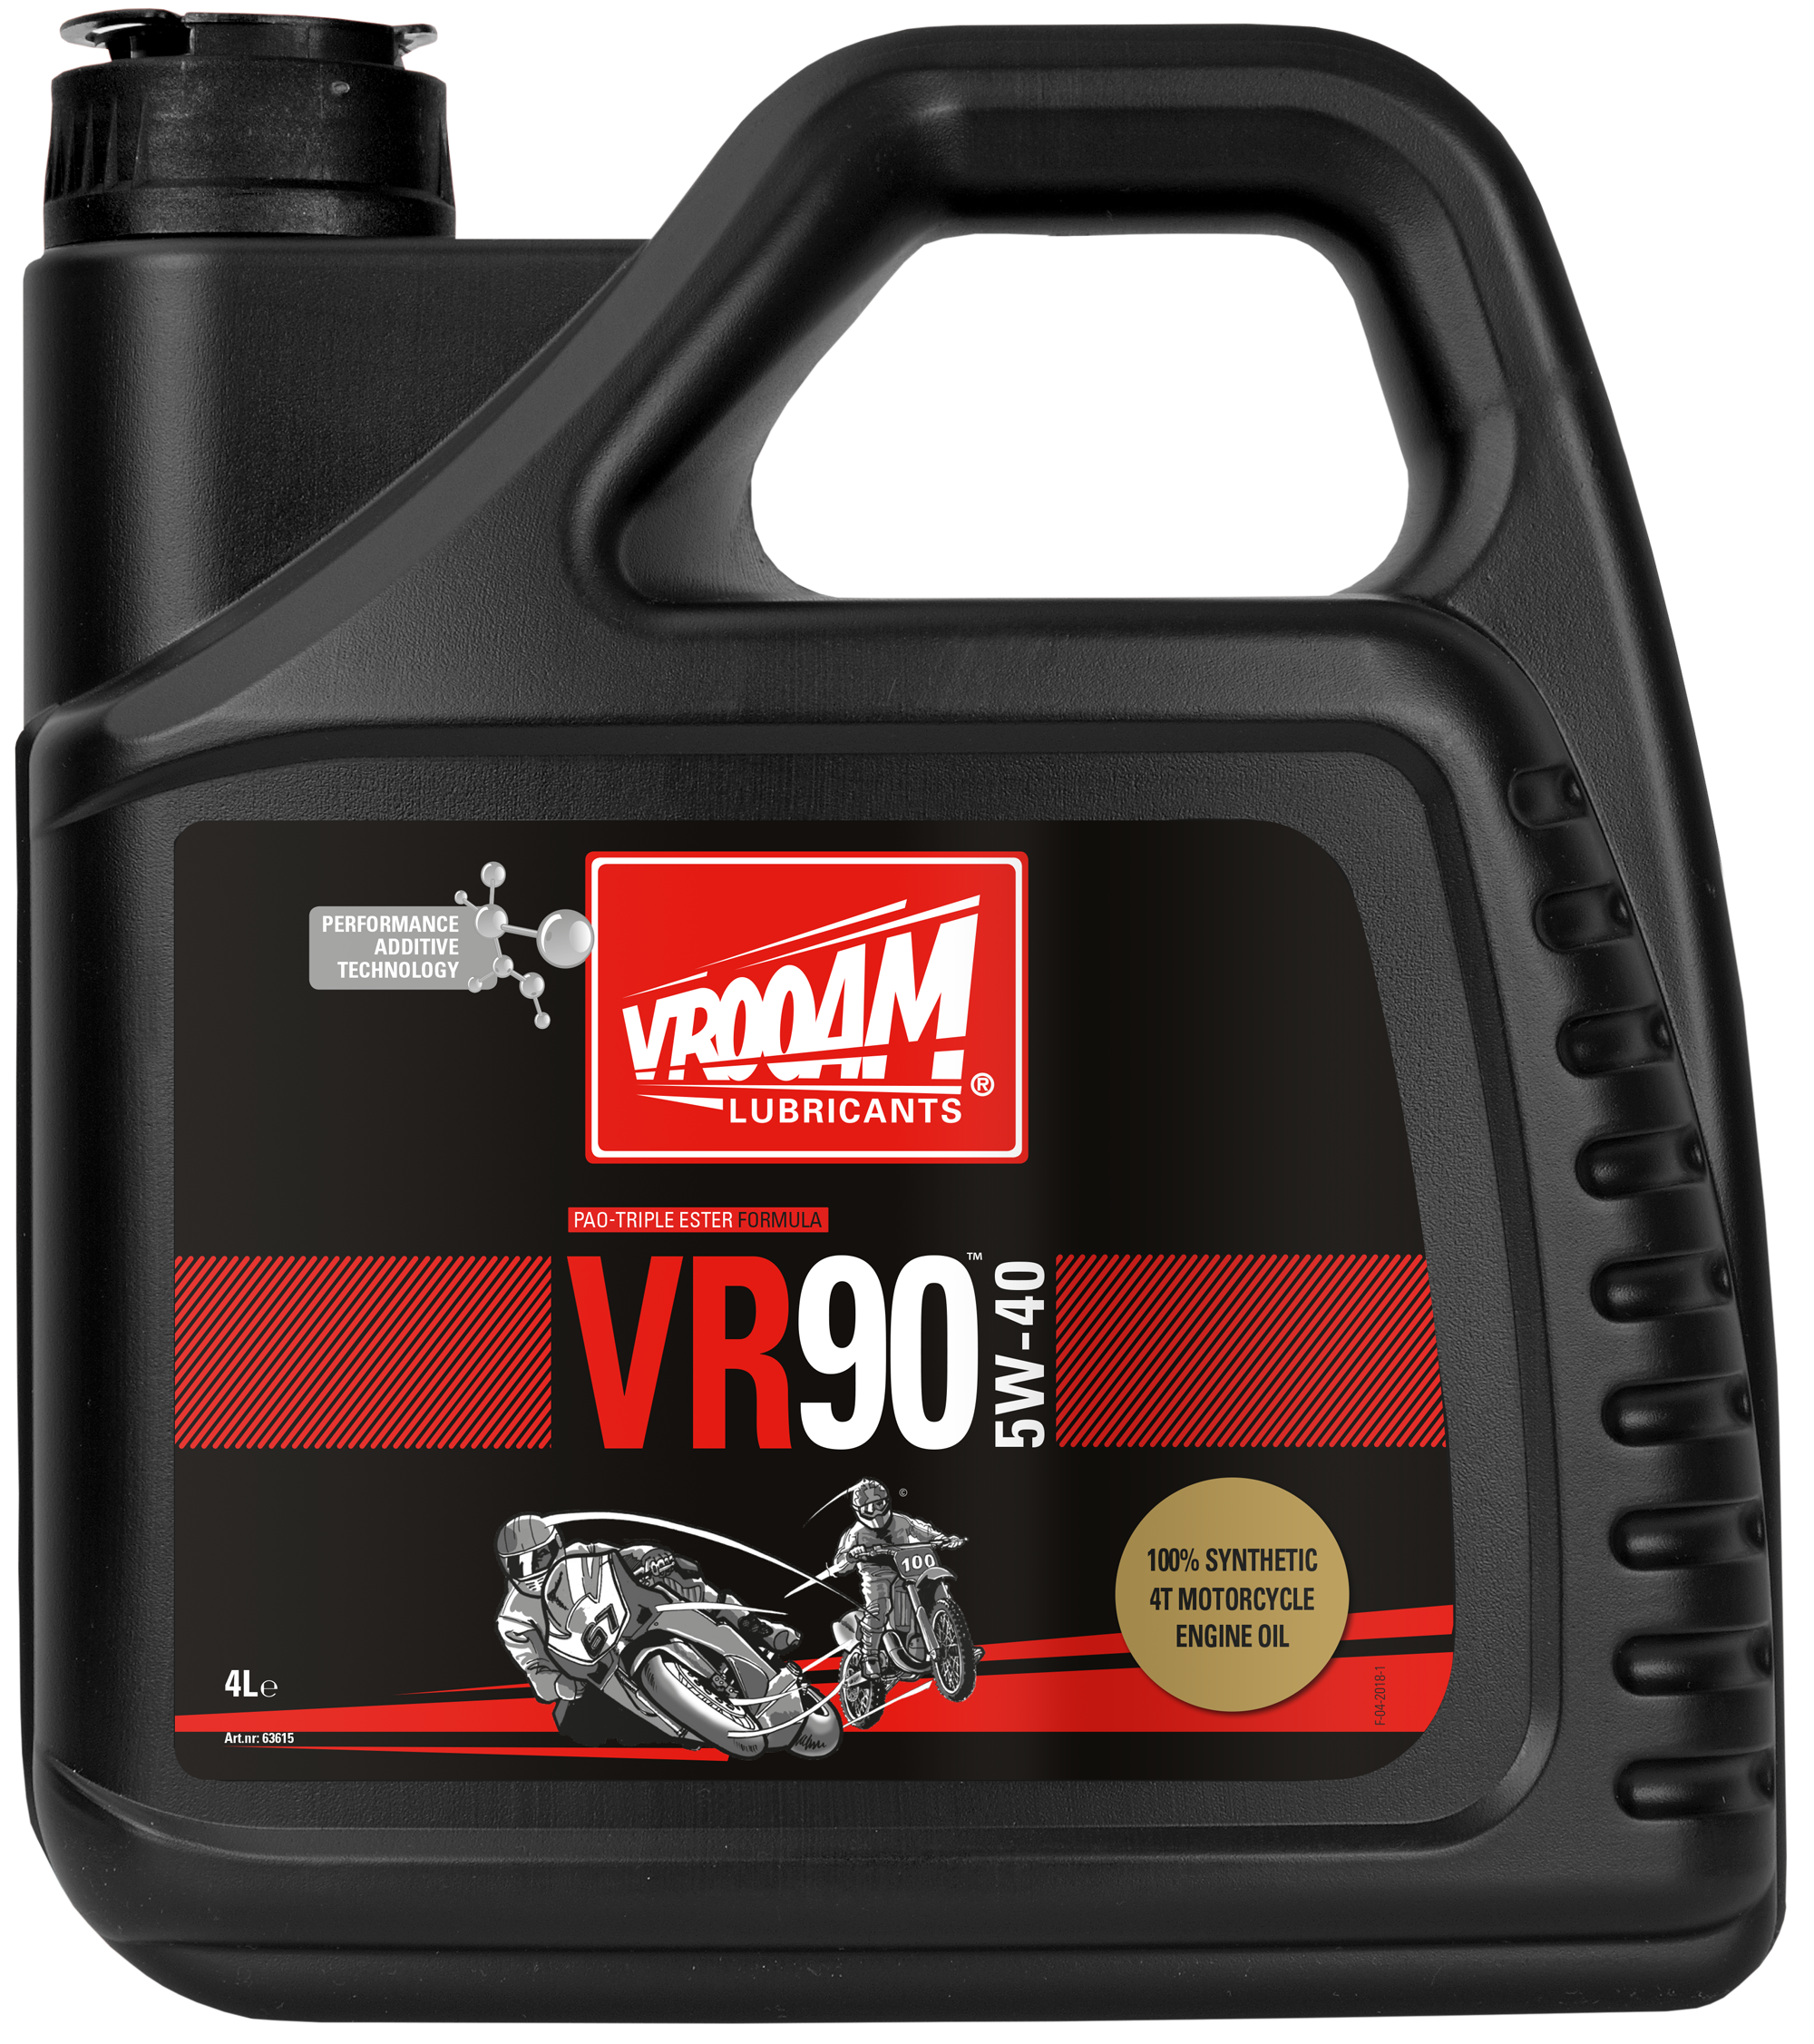 Vrooam VR90 Engine Oil 5W-40 4 L Size